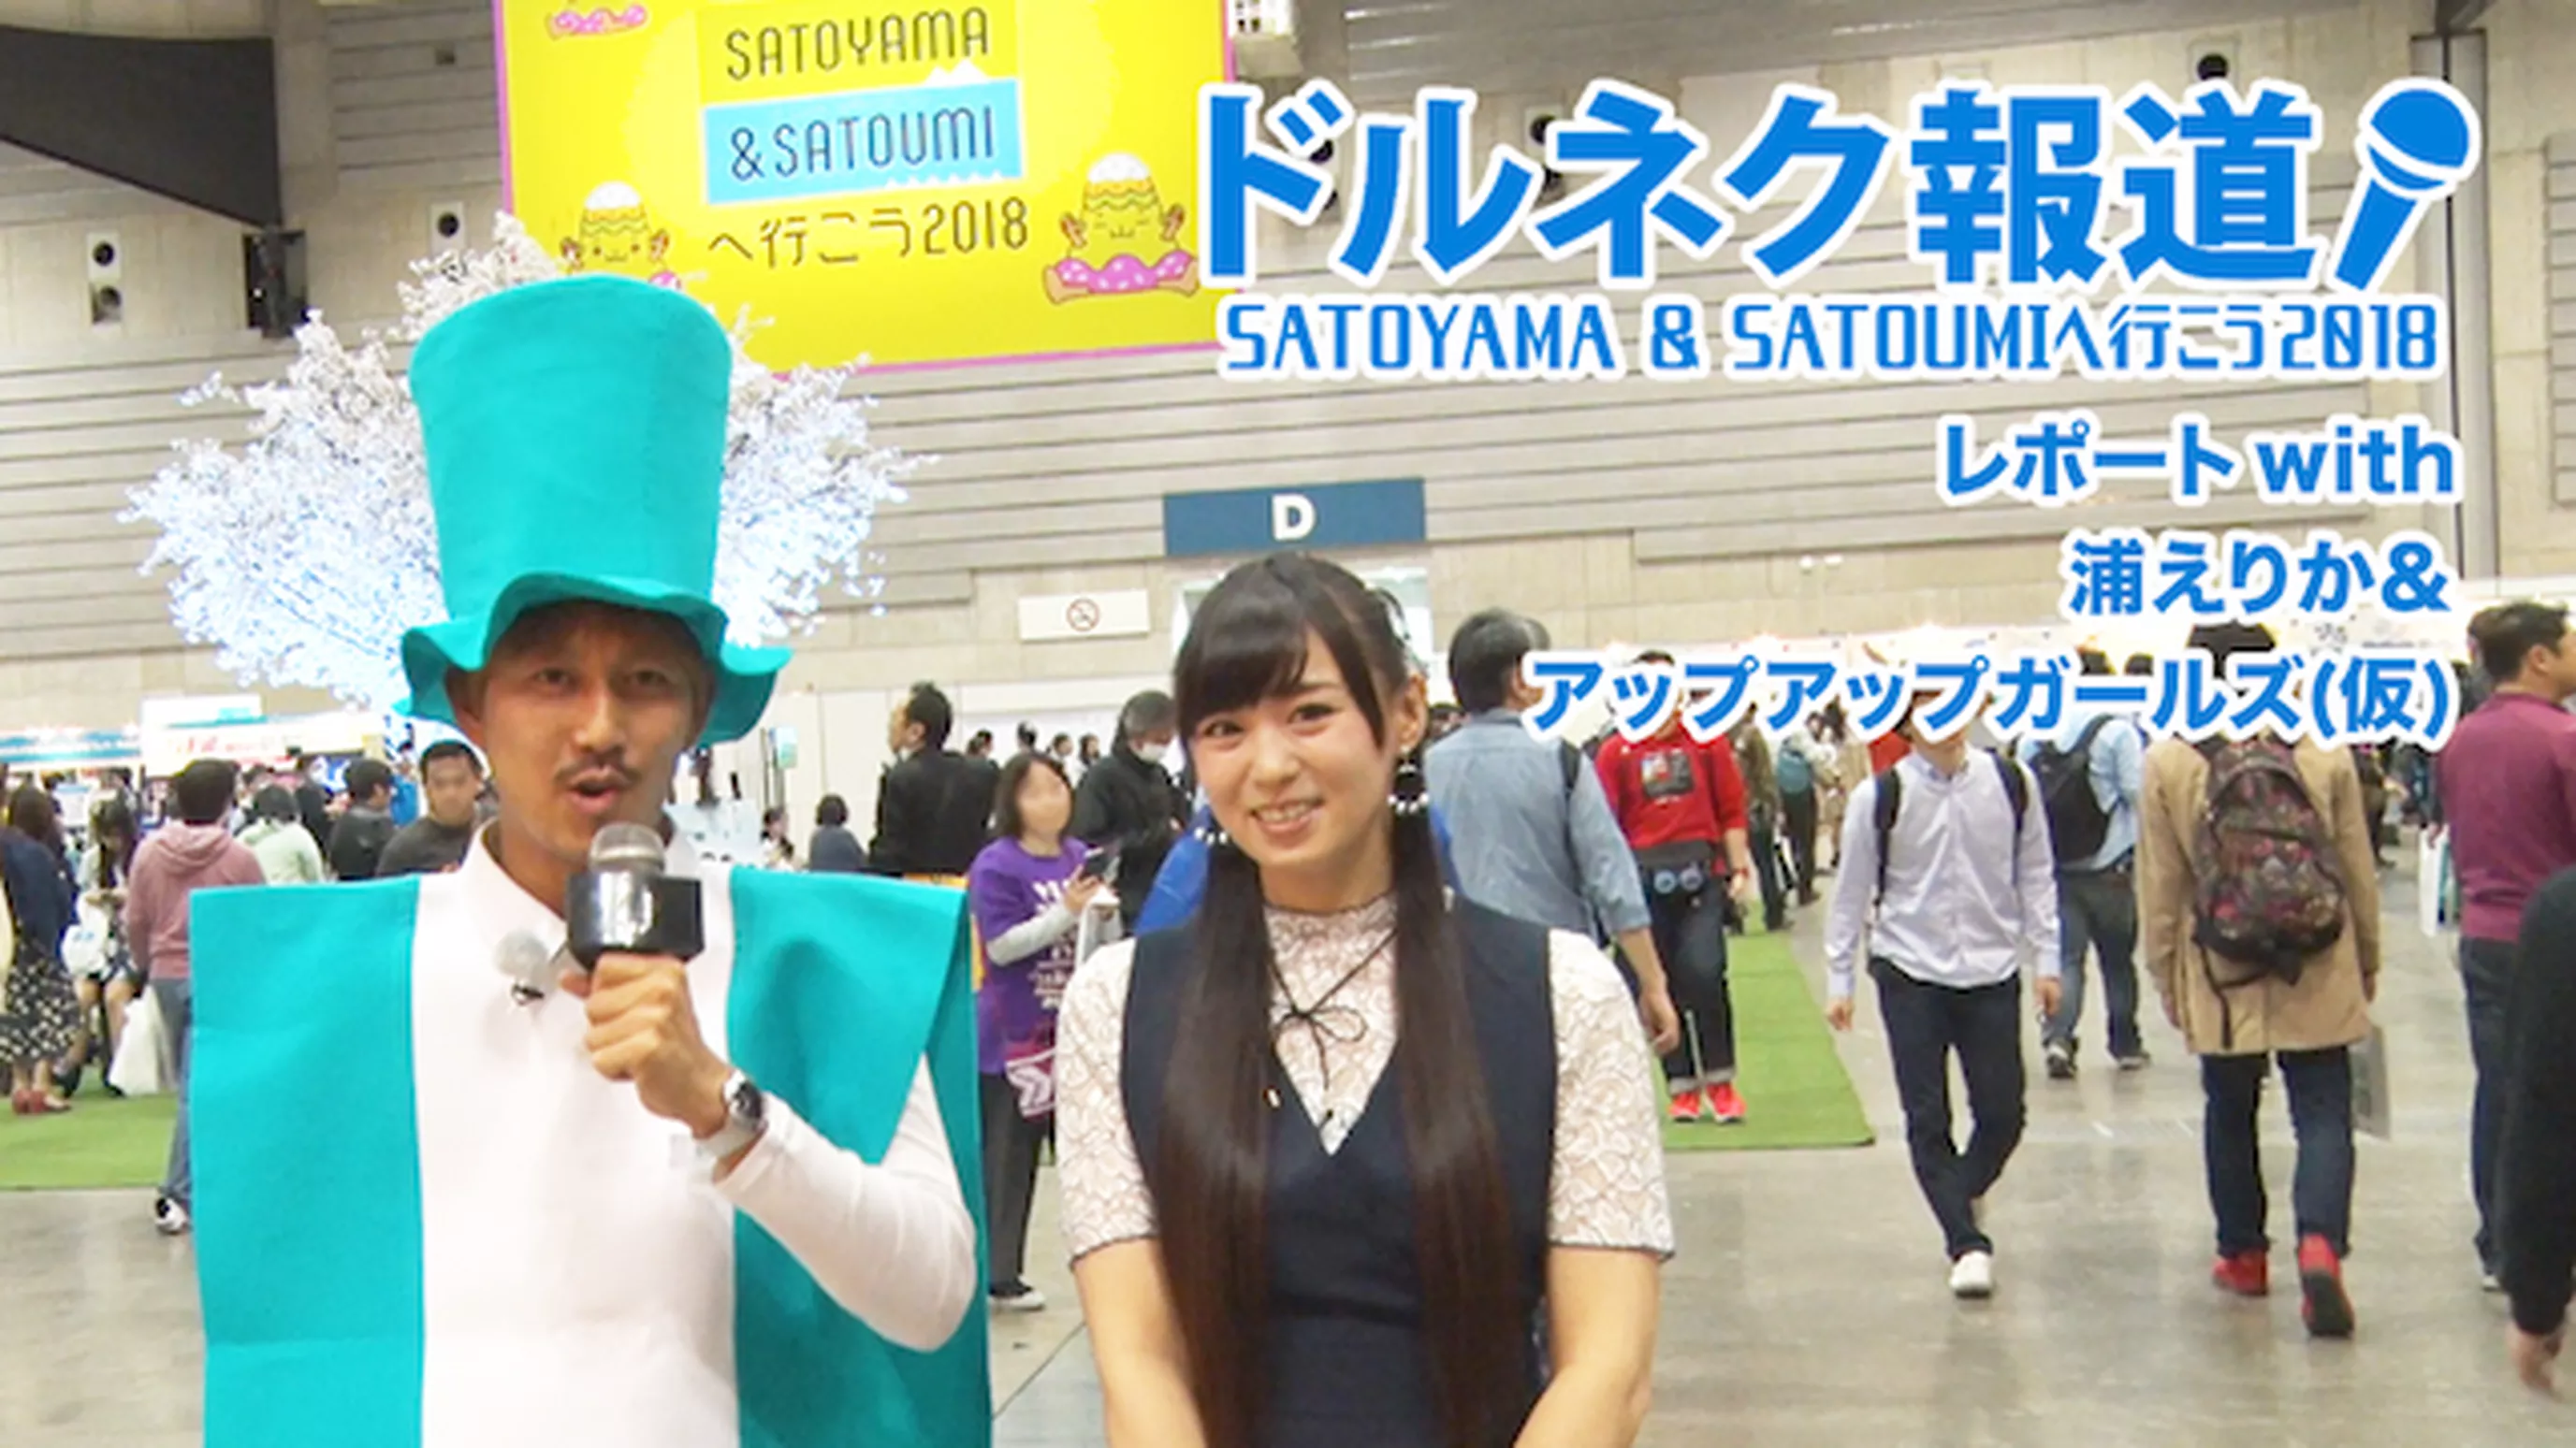 SATOYAMA&SATOUMIへ行こう2018レポート【ドルネク報道】with 浦えりか & アップアップガールズ(仮) 